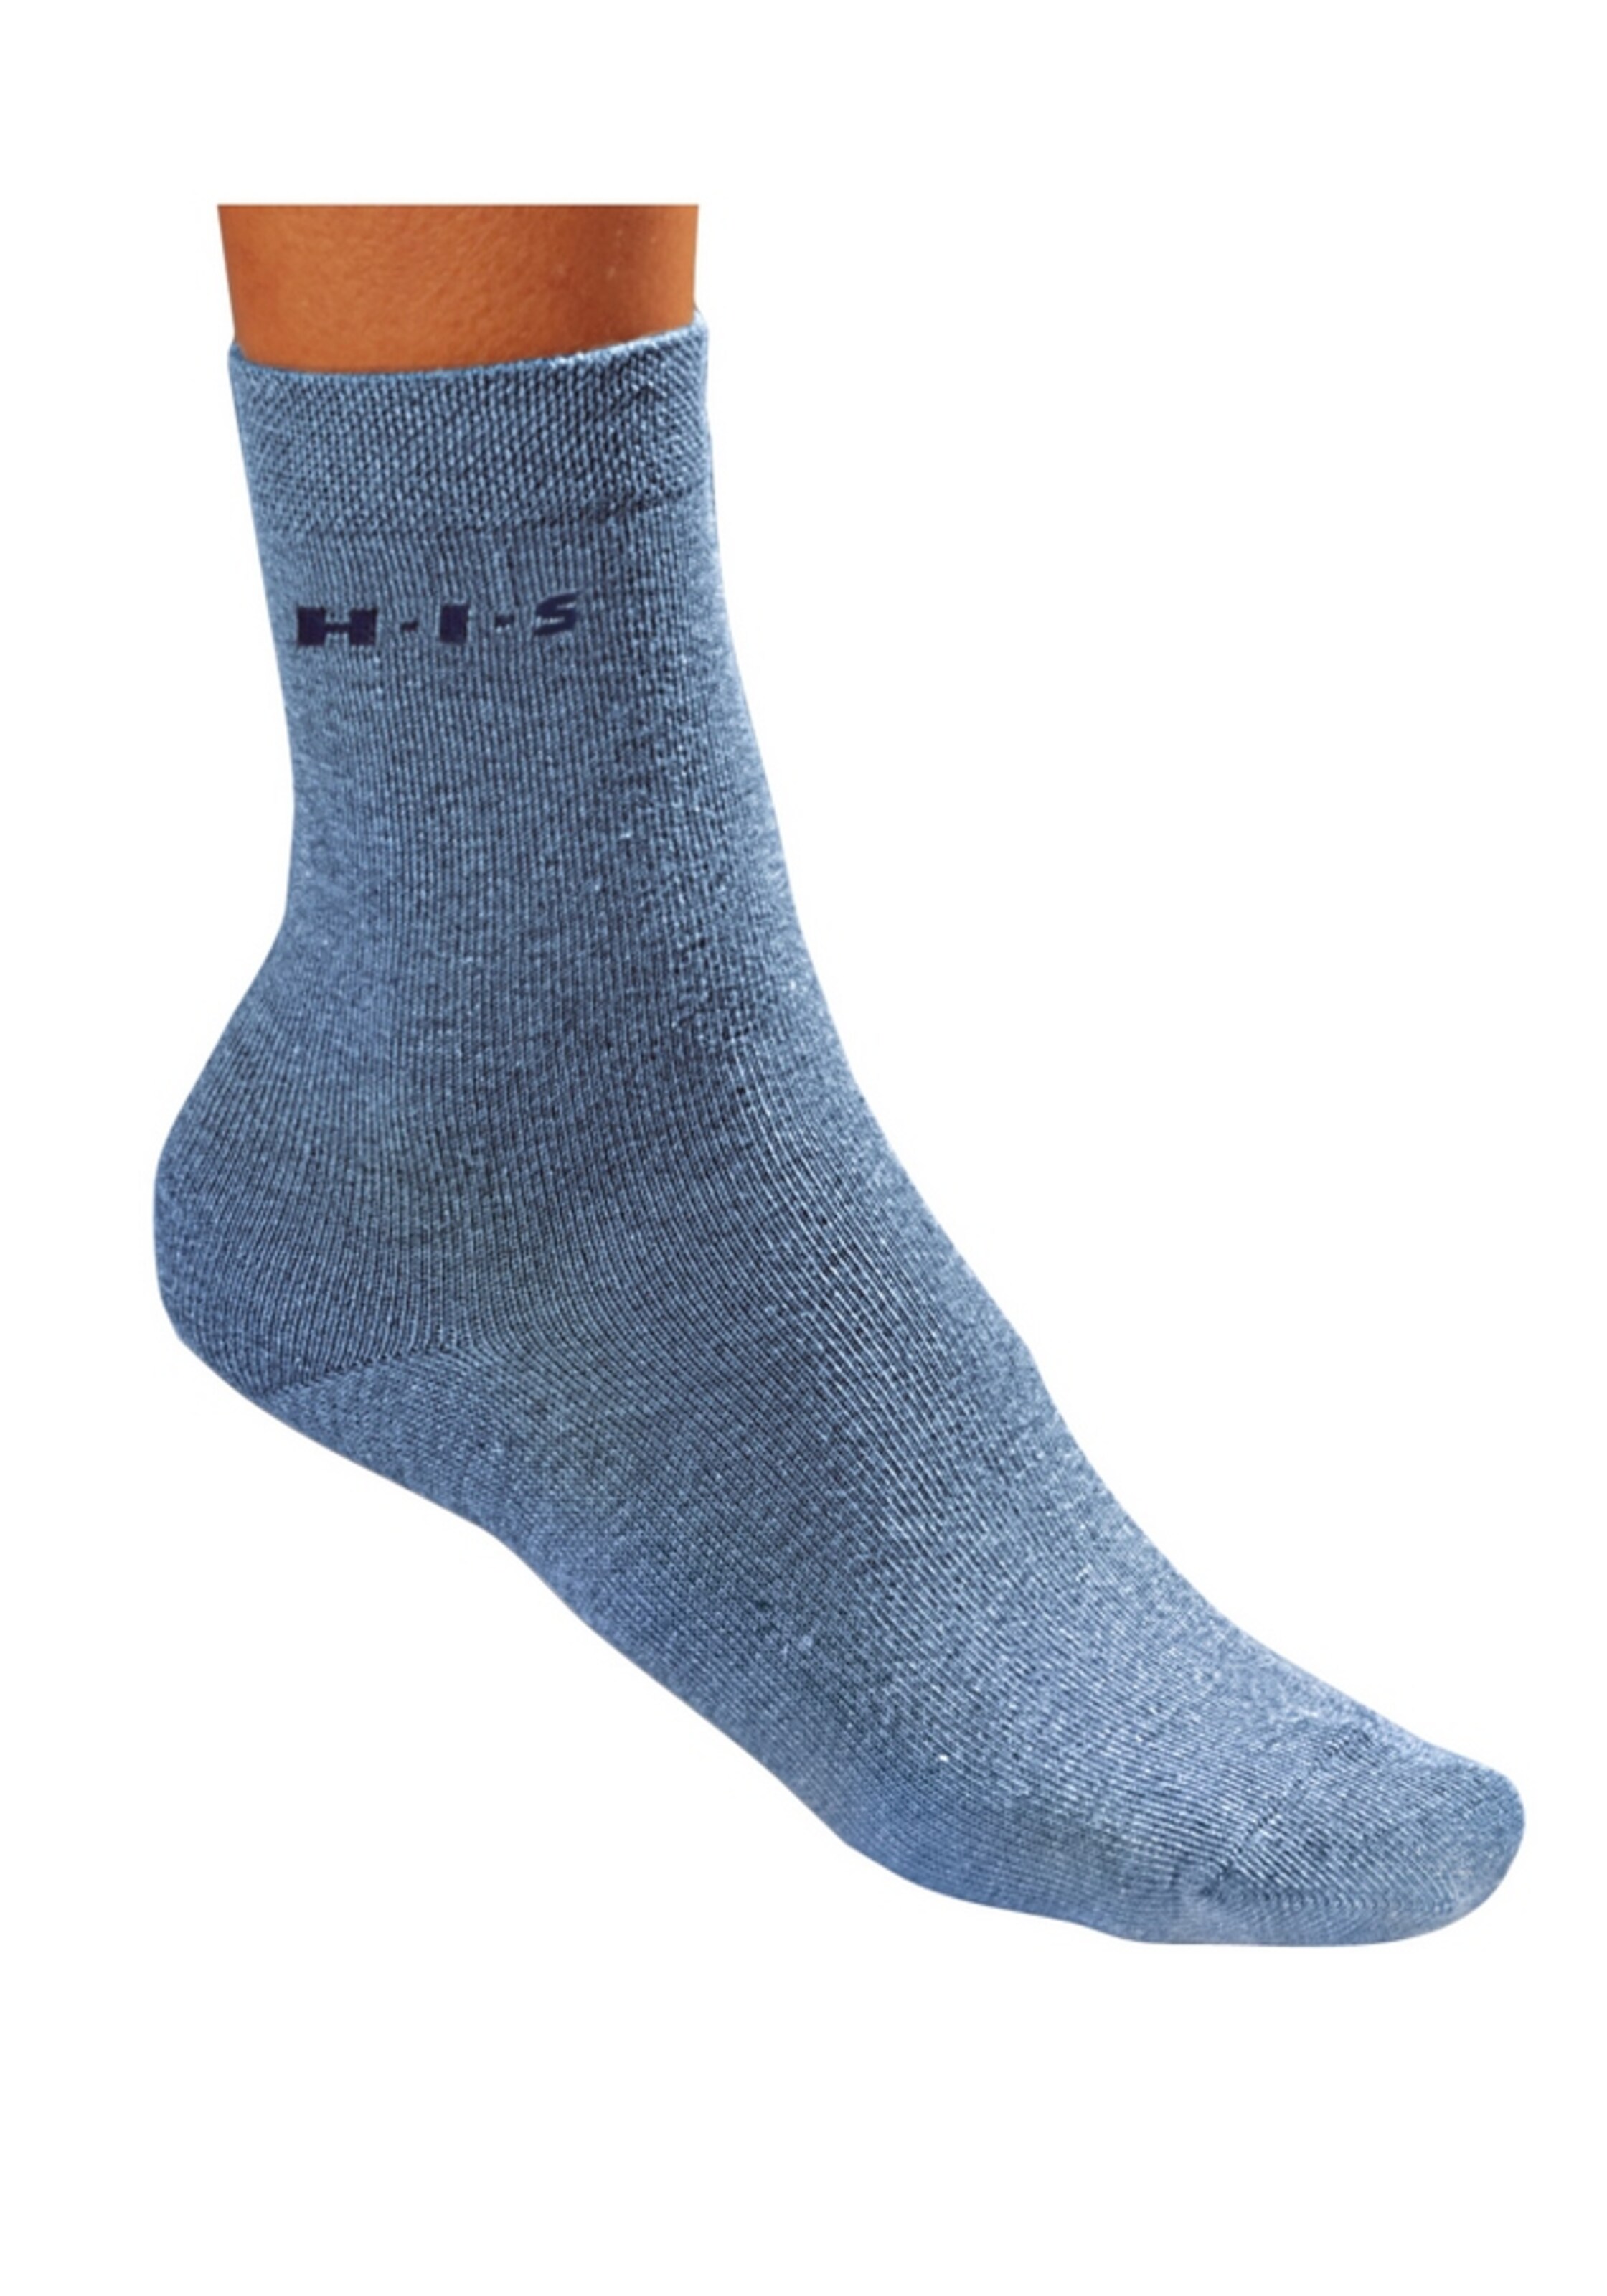 Frauen Wäsche H.I.S Socken in Blau, Grau - XJ49580